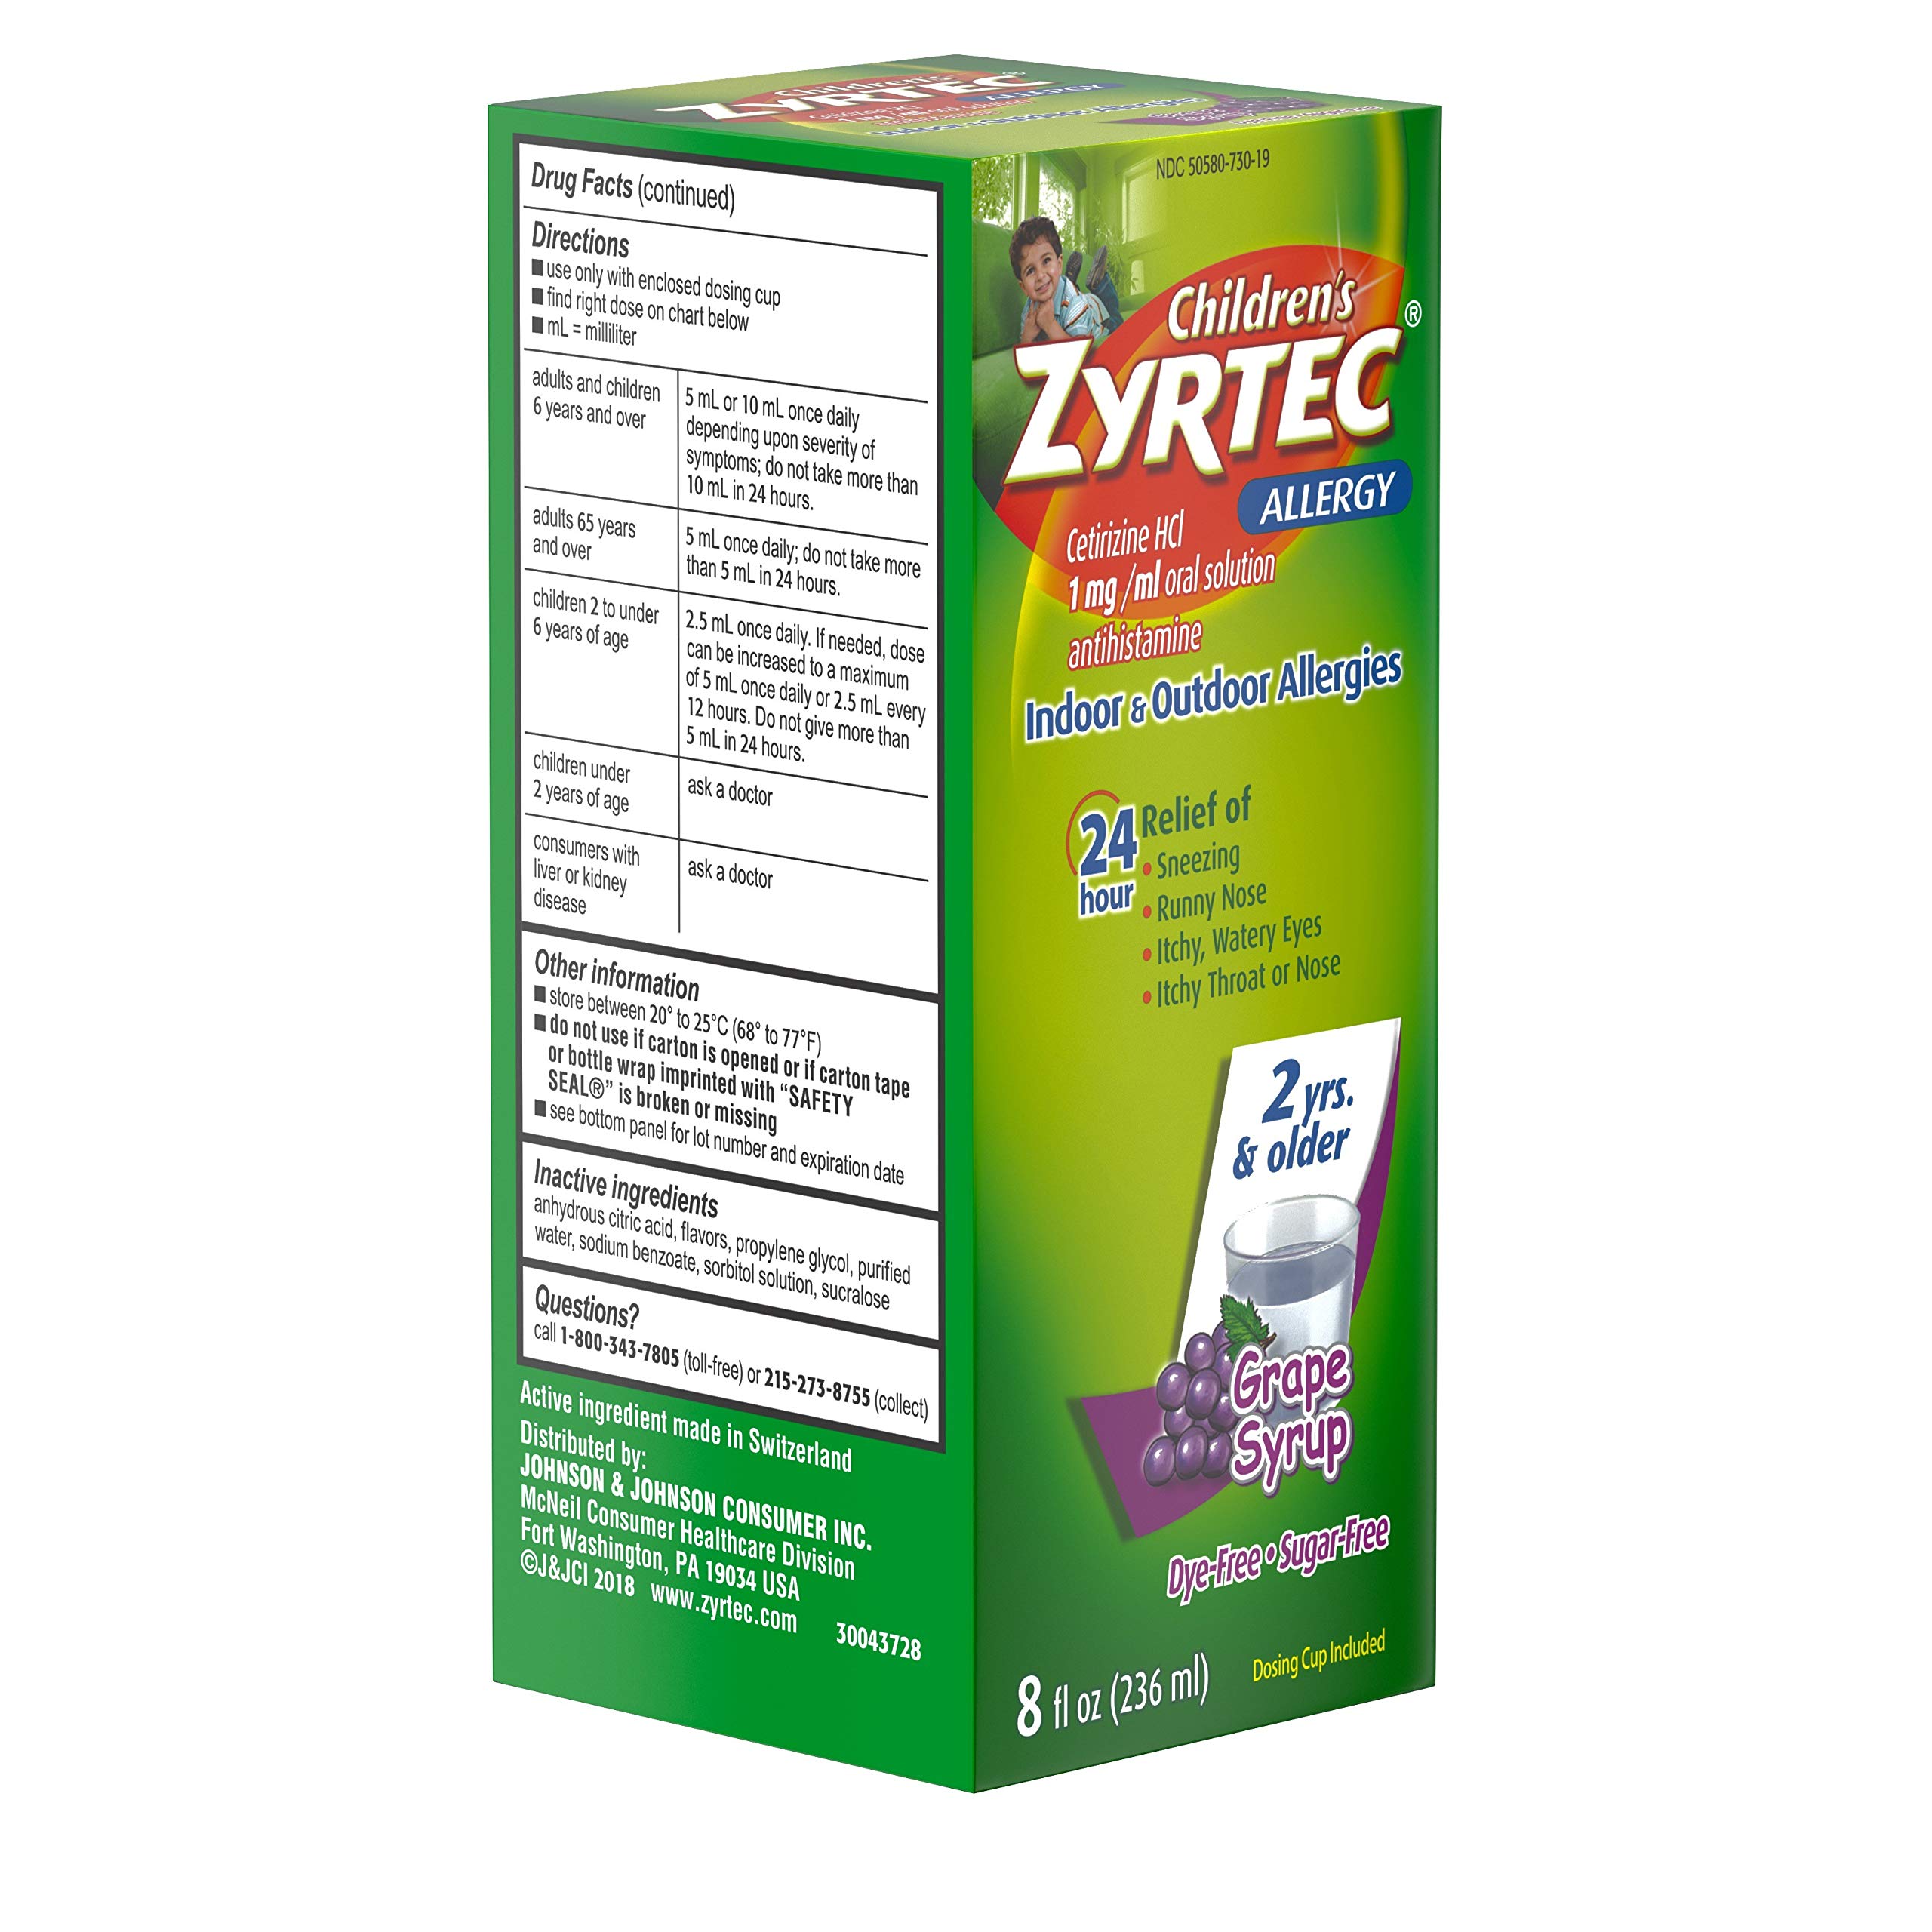 Zyrtec 24 Hour Children's Allergy Syrup with Cetirizine HCl, Antihistamine Allergy Medicine for Indoor & Outdoor Allergy Relief for Kids, Dye-Free & Sugar-Free, Grape Flavor, 8 fl. oz